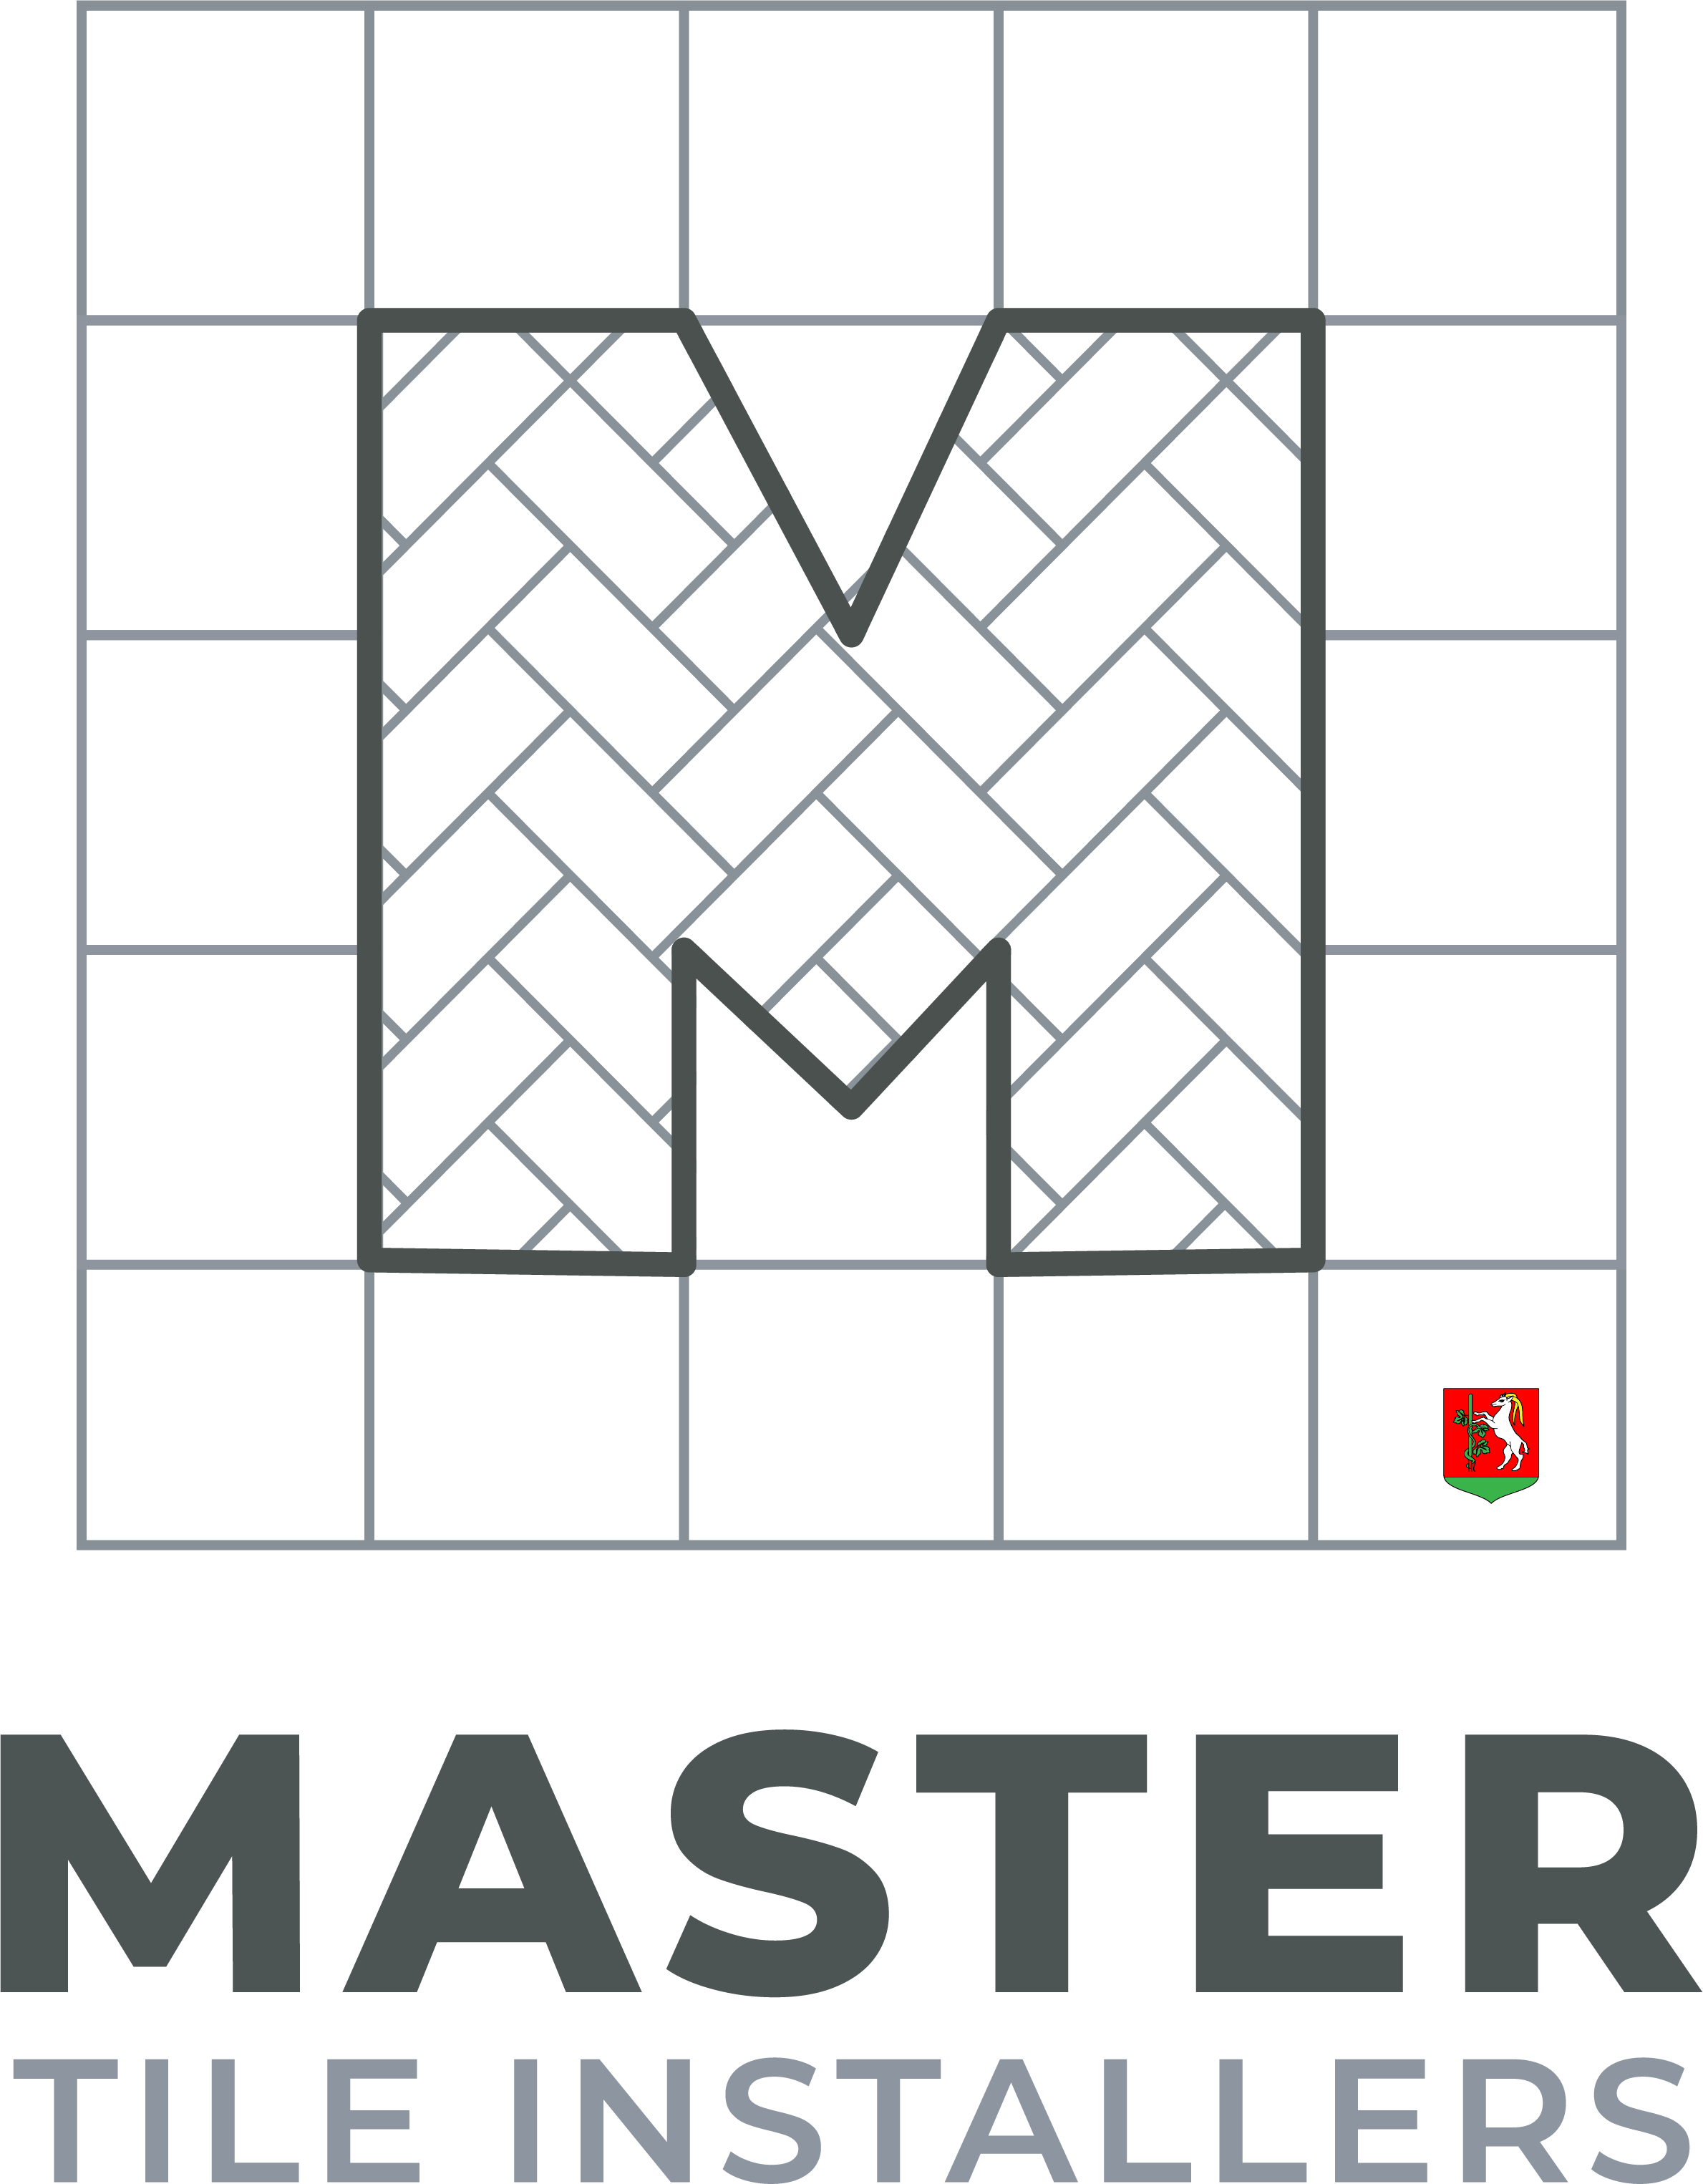 Master Tile Installers Licensed, Master Tile Las Vegas Nevada